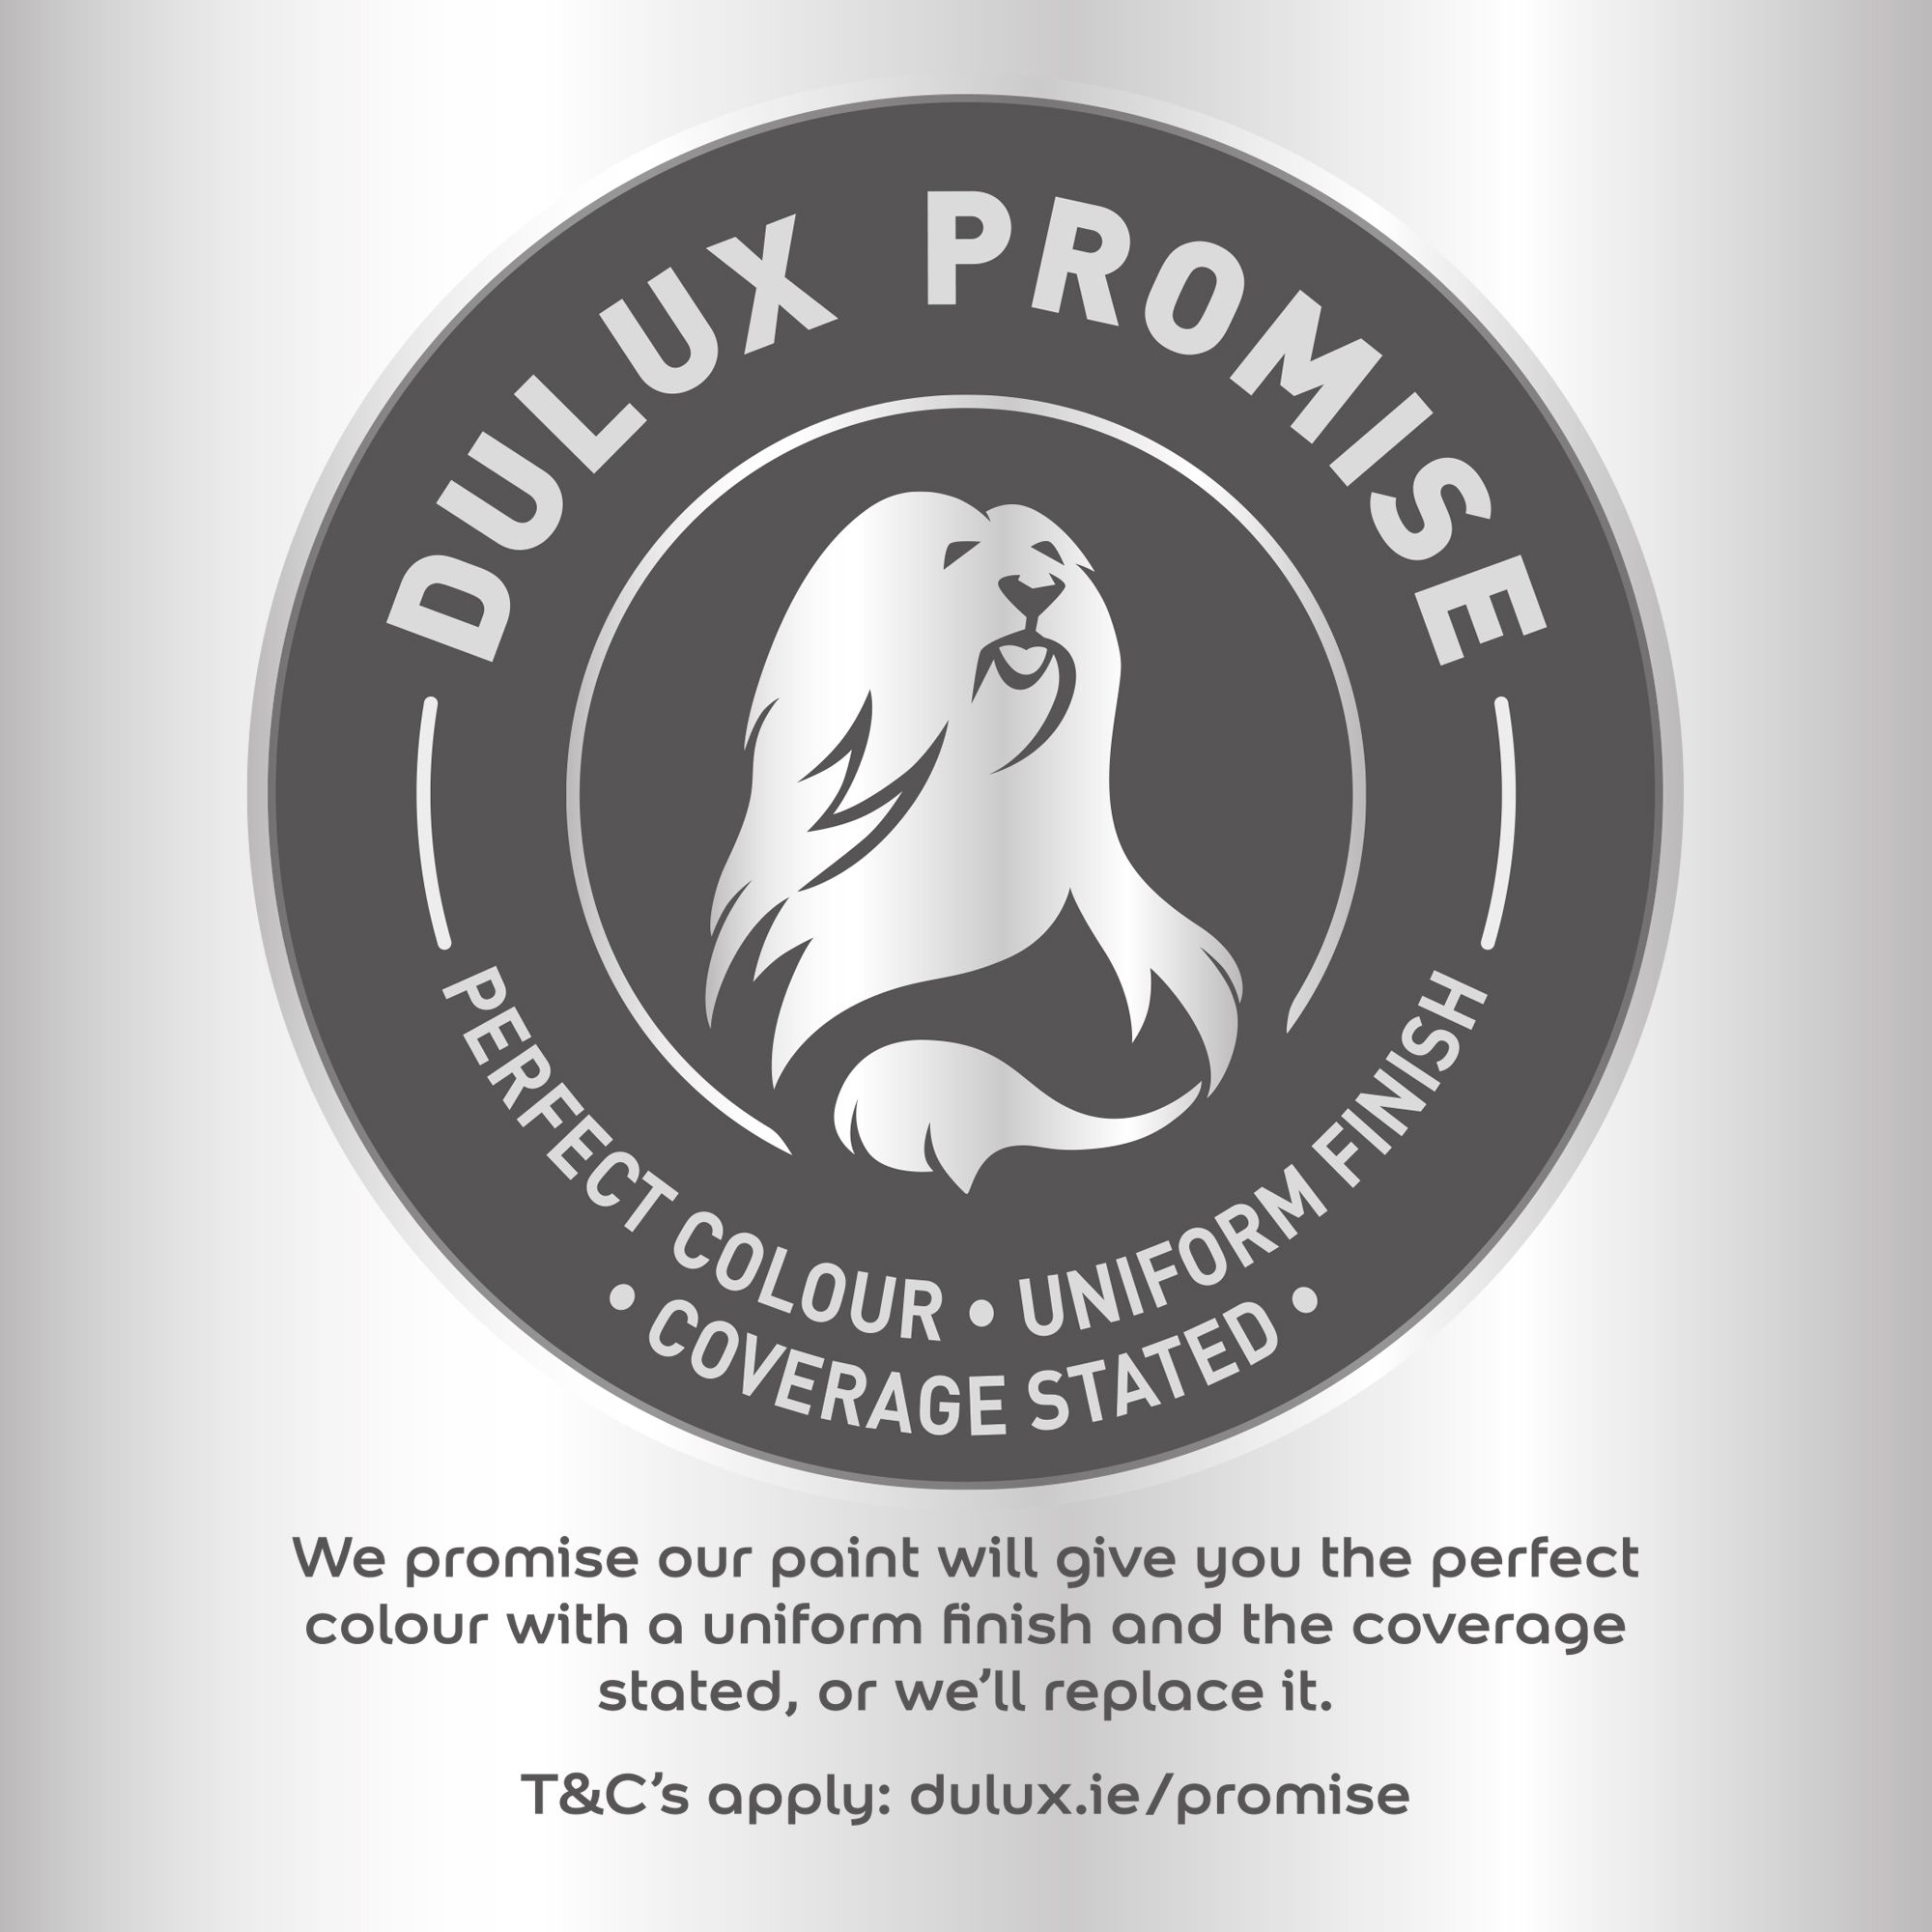 Dulux Easycare Morning glow Vinyl matt Emulsion paint, 5L